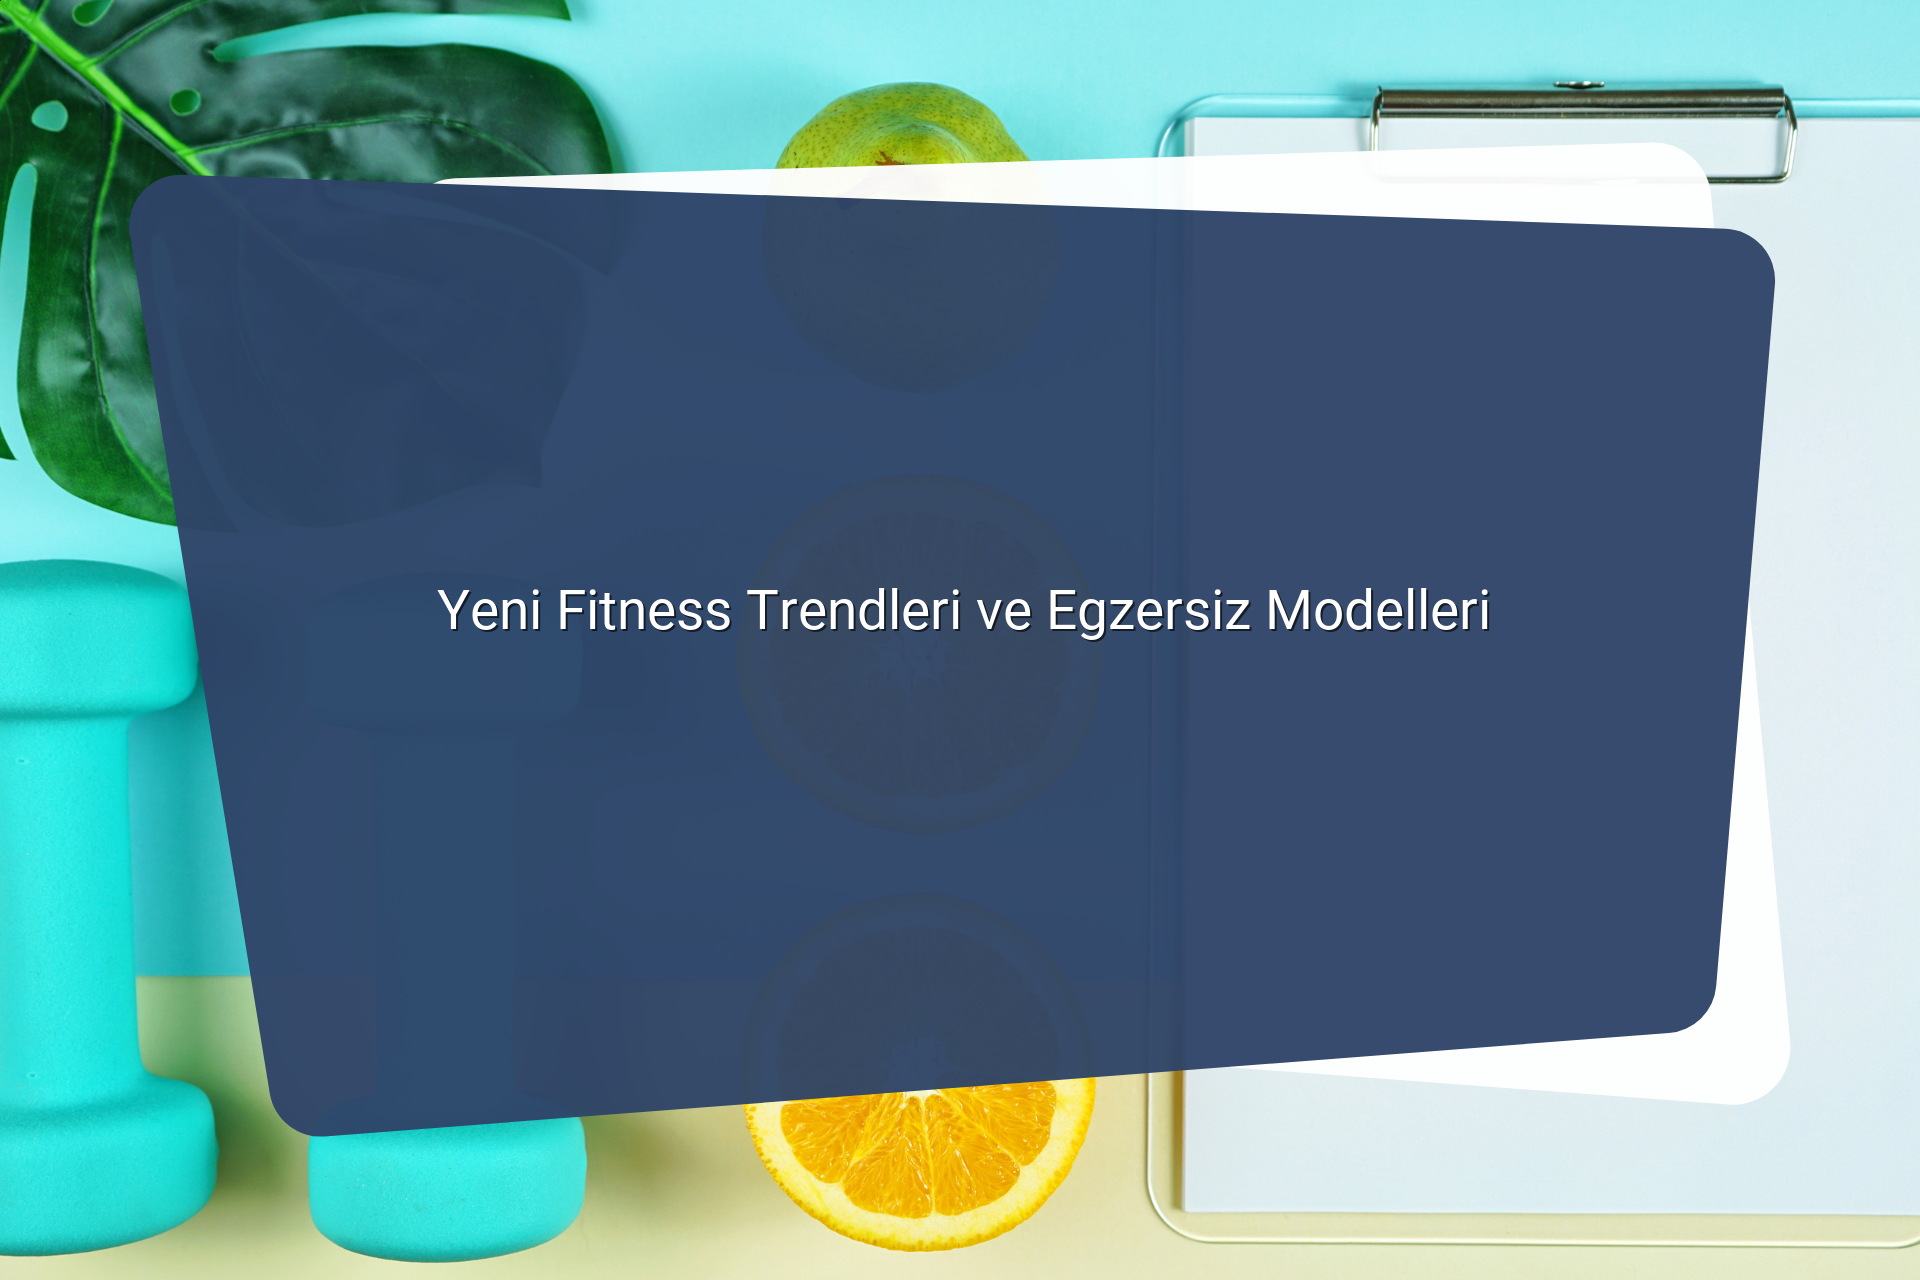 Yeni Fitness Trendleri ve Egzersiz Modelleri